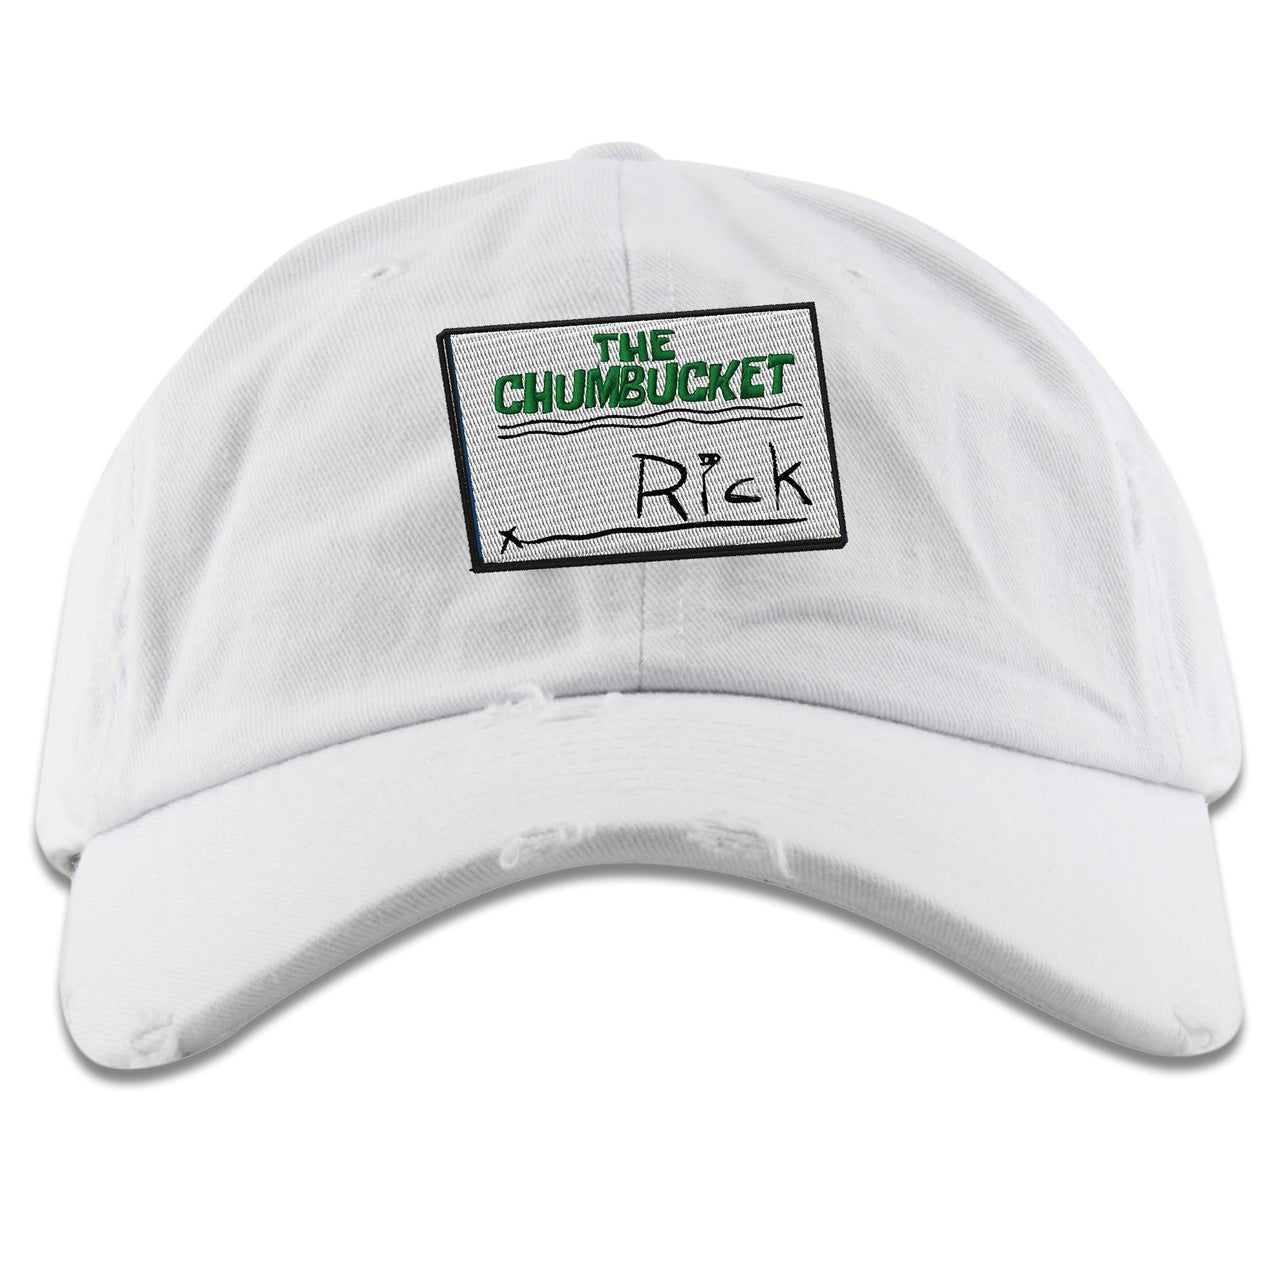 Patrick K5s Distressed Dad Hat | Rick, White